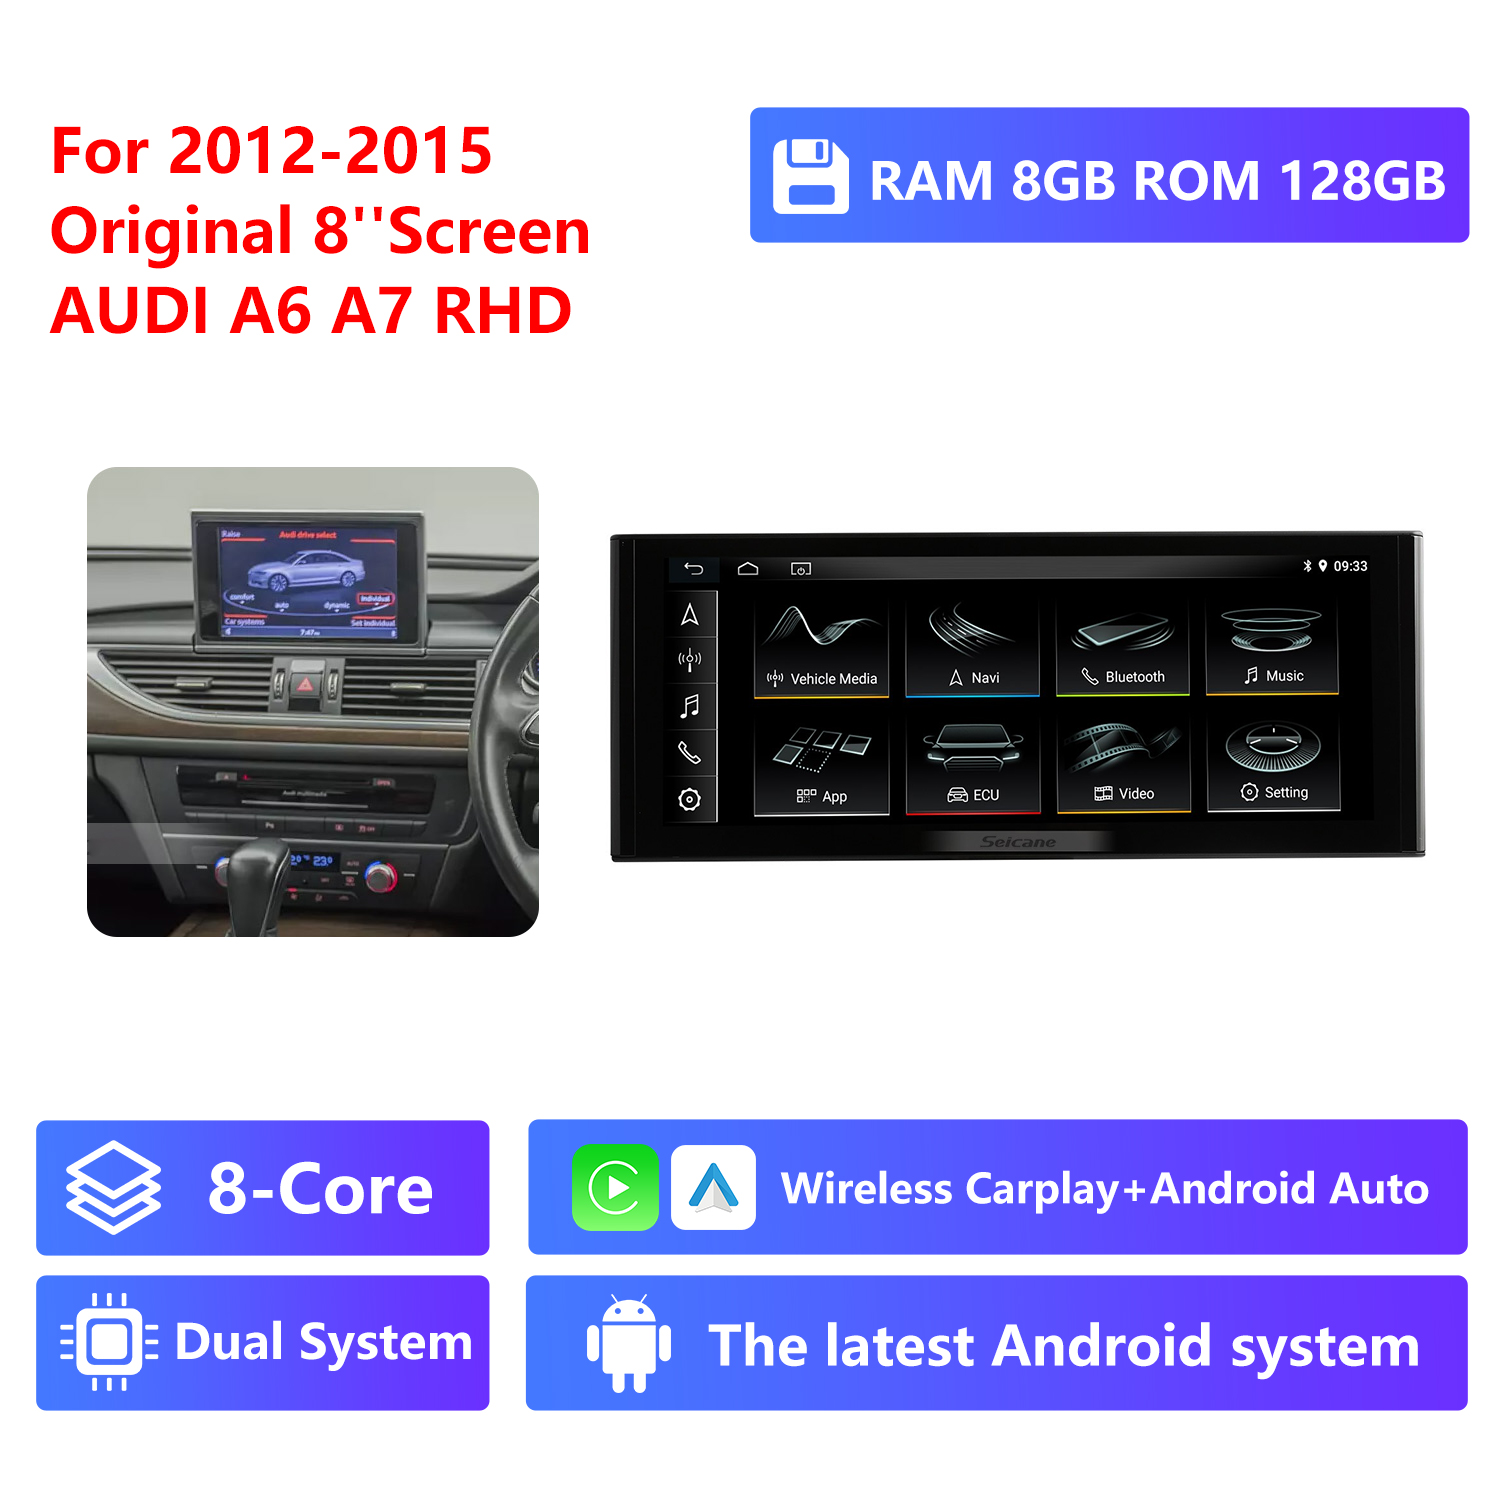 8-Core RAM 8G ROM 128G,2012-2015, Original 8"Screen,RHD